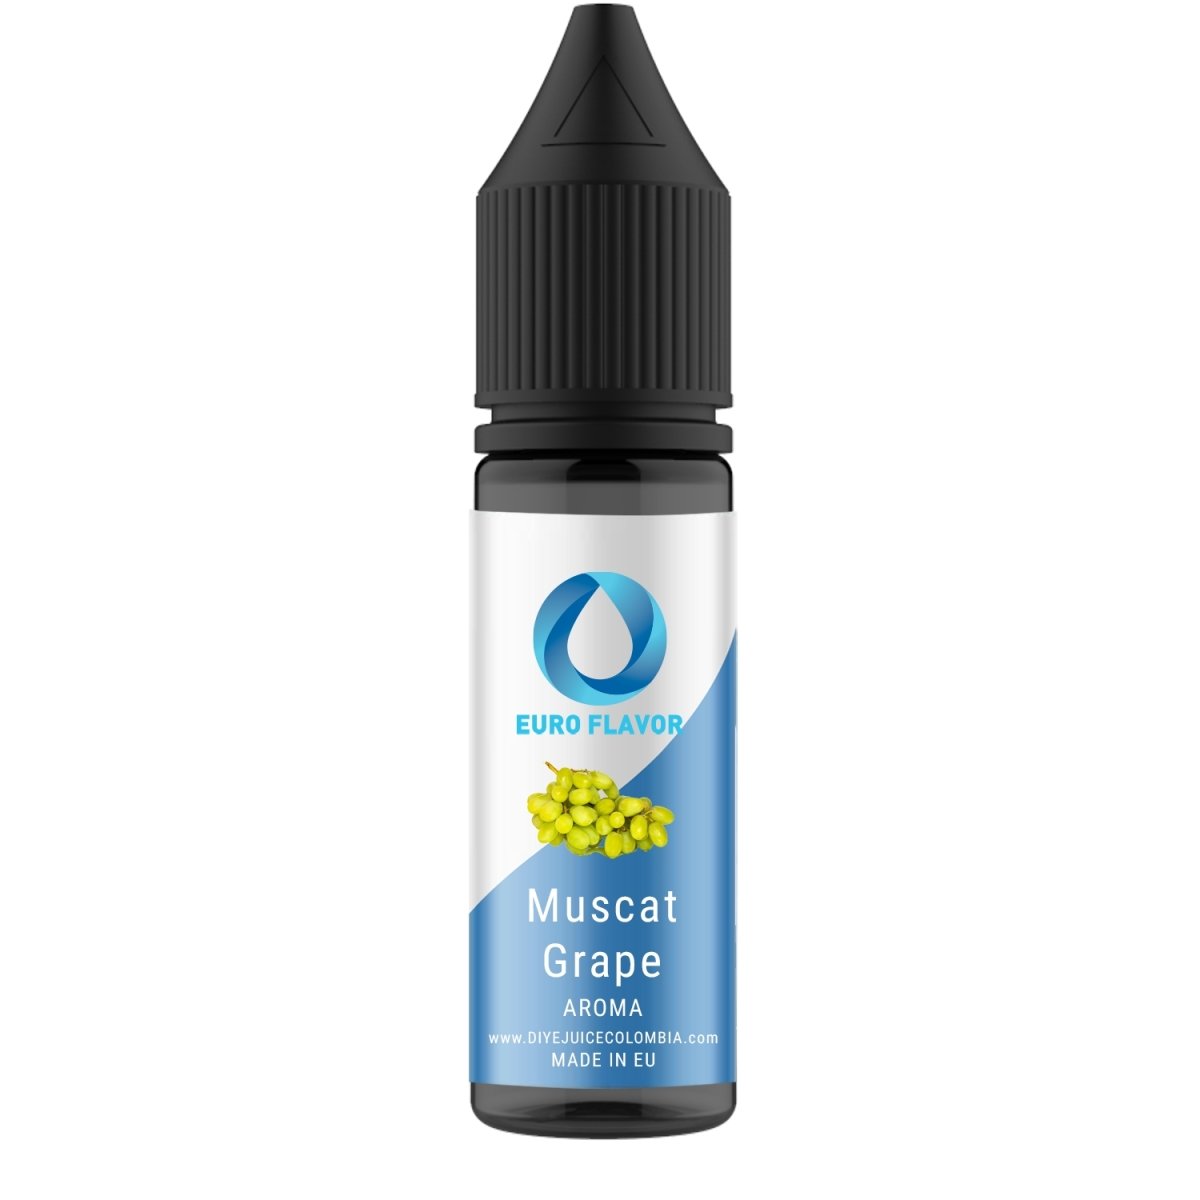 Muscat Grape EF - Euro Flavor - Aroma - DIY VAPE SHOP | AR-EF-MGR